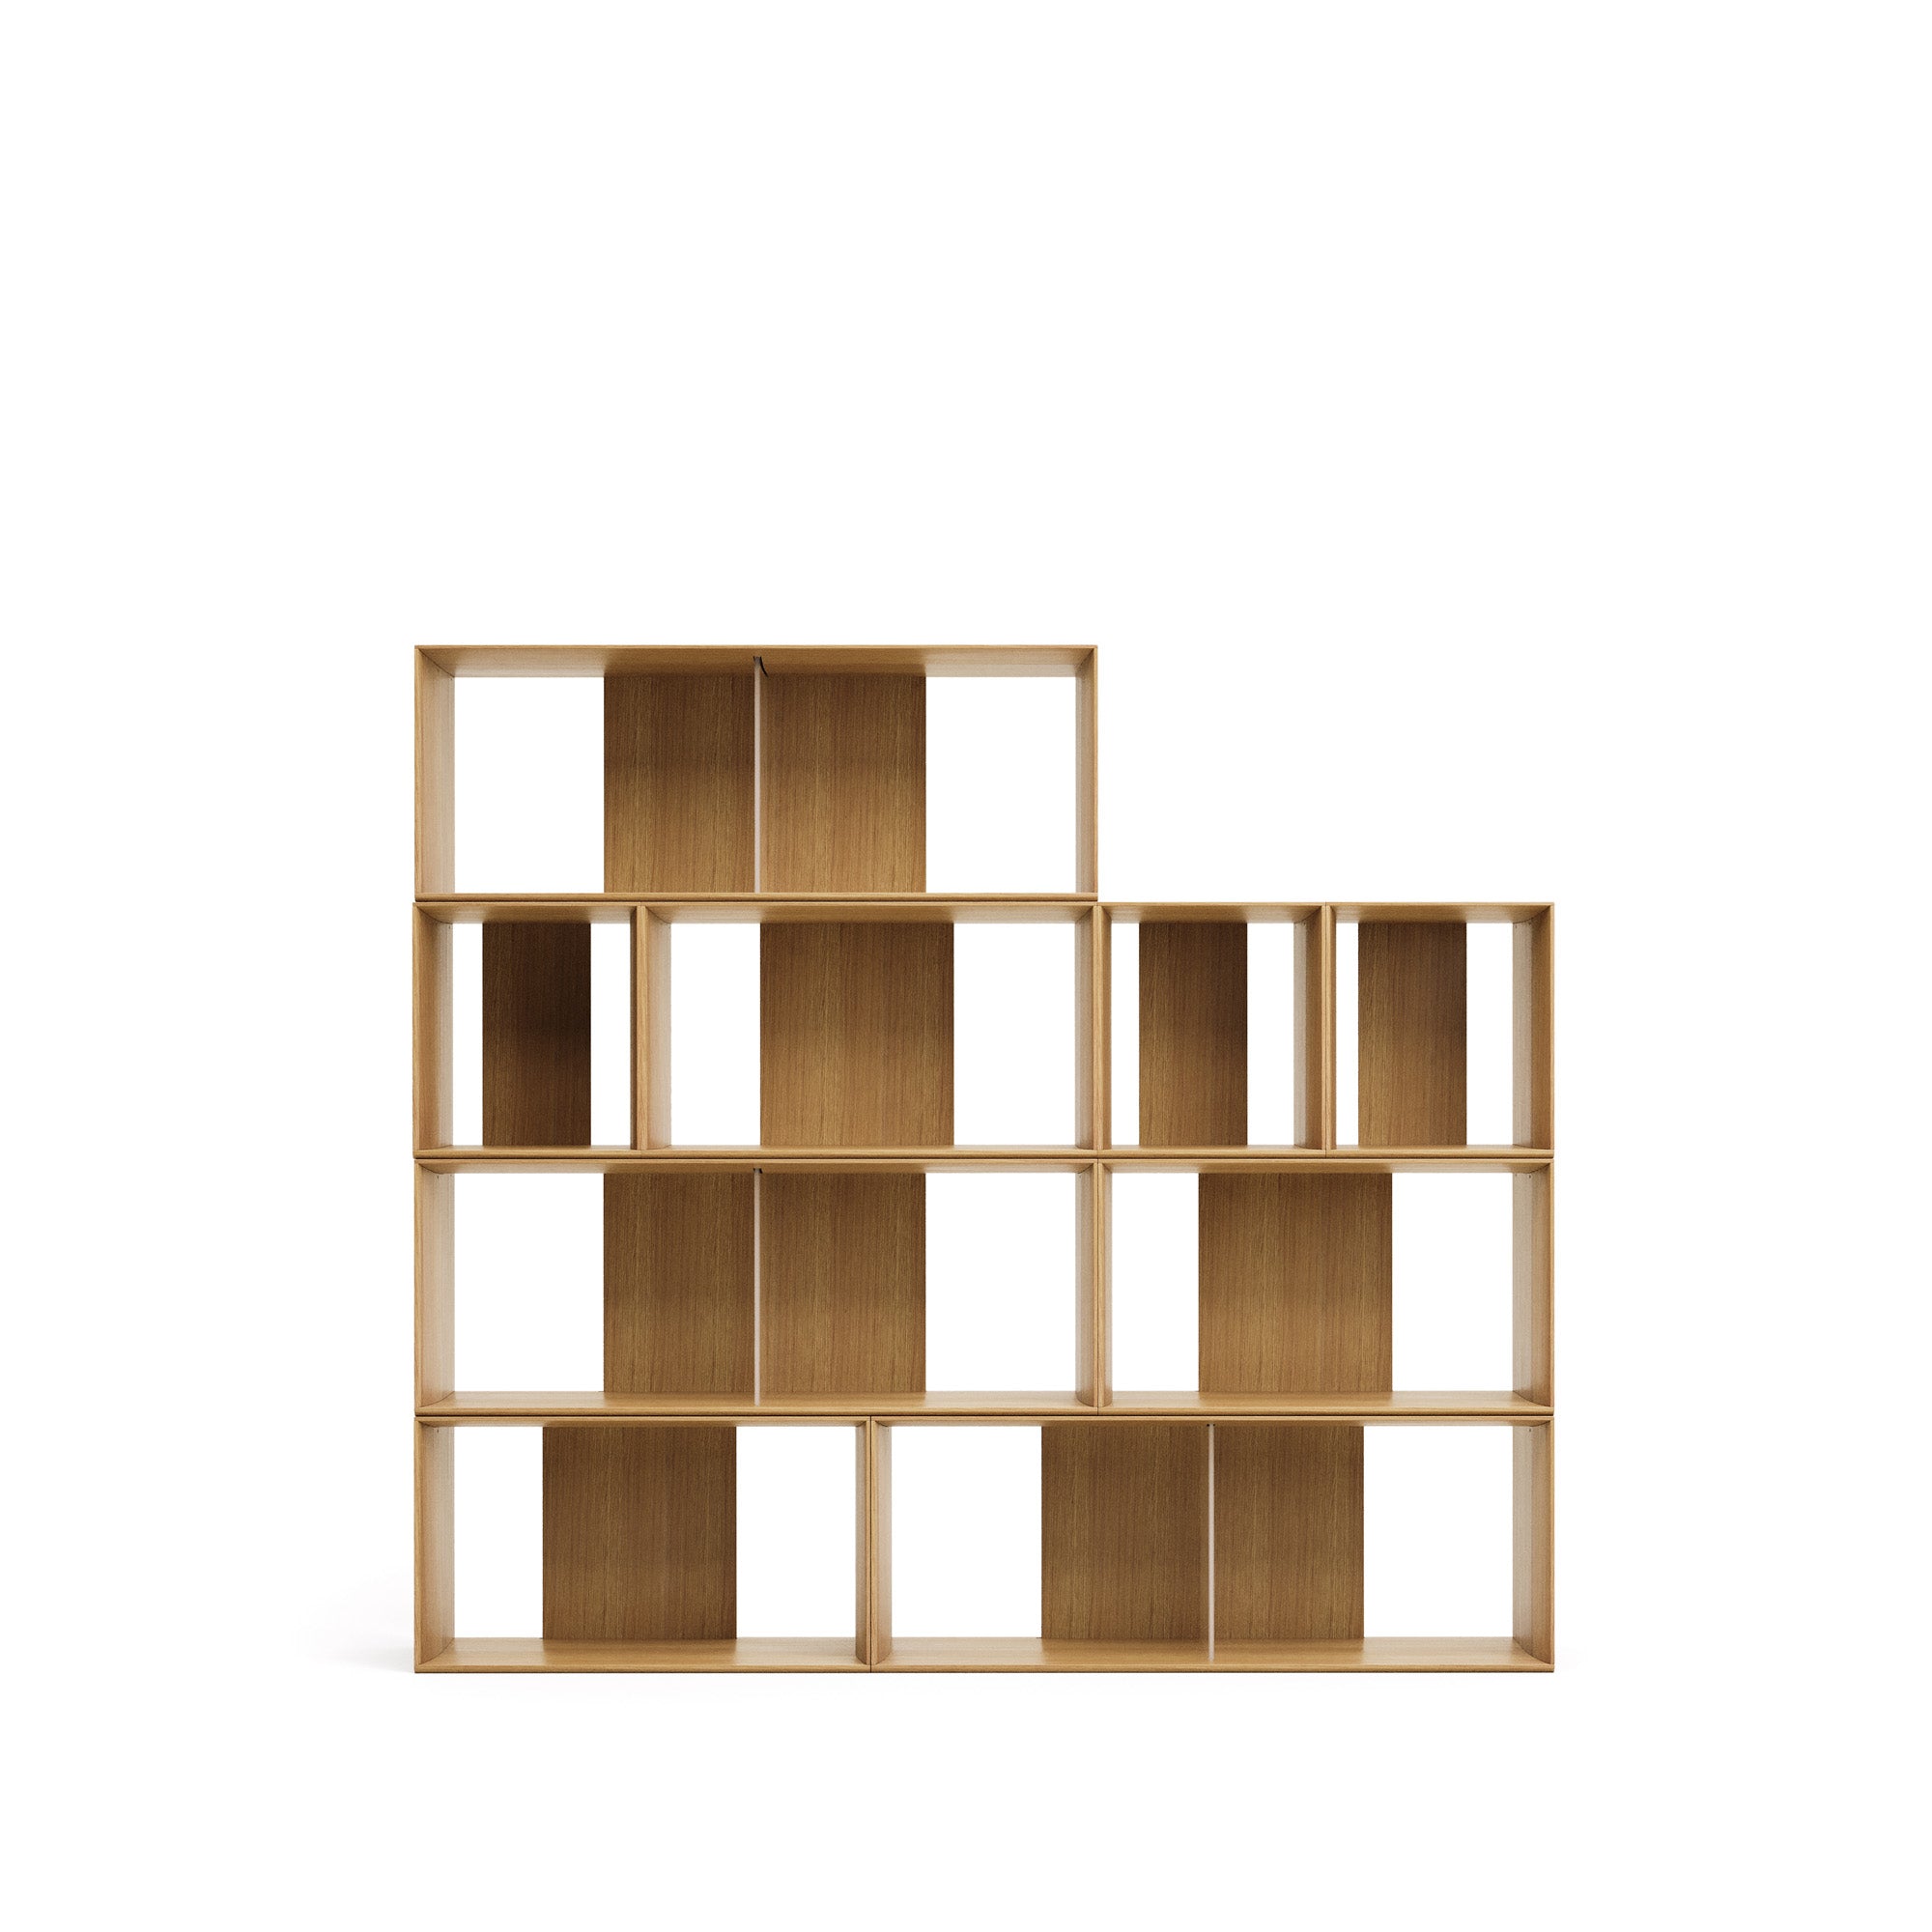 Litto set of 9 modular shelving units in oak wood veneer, 202 x 114 cm